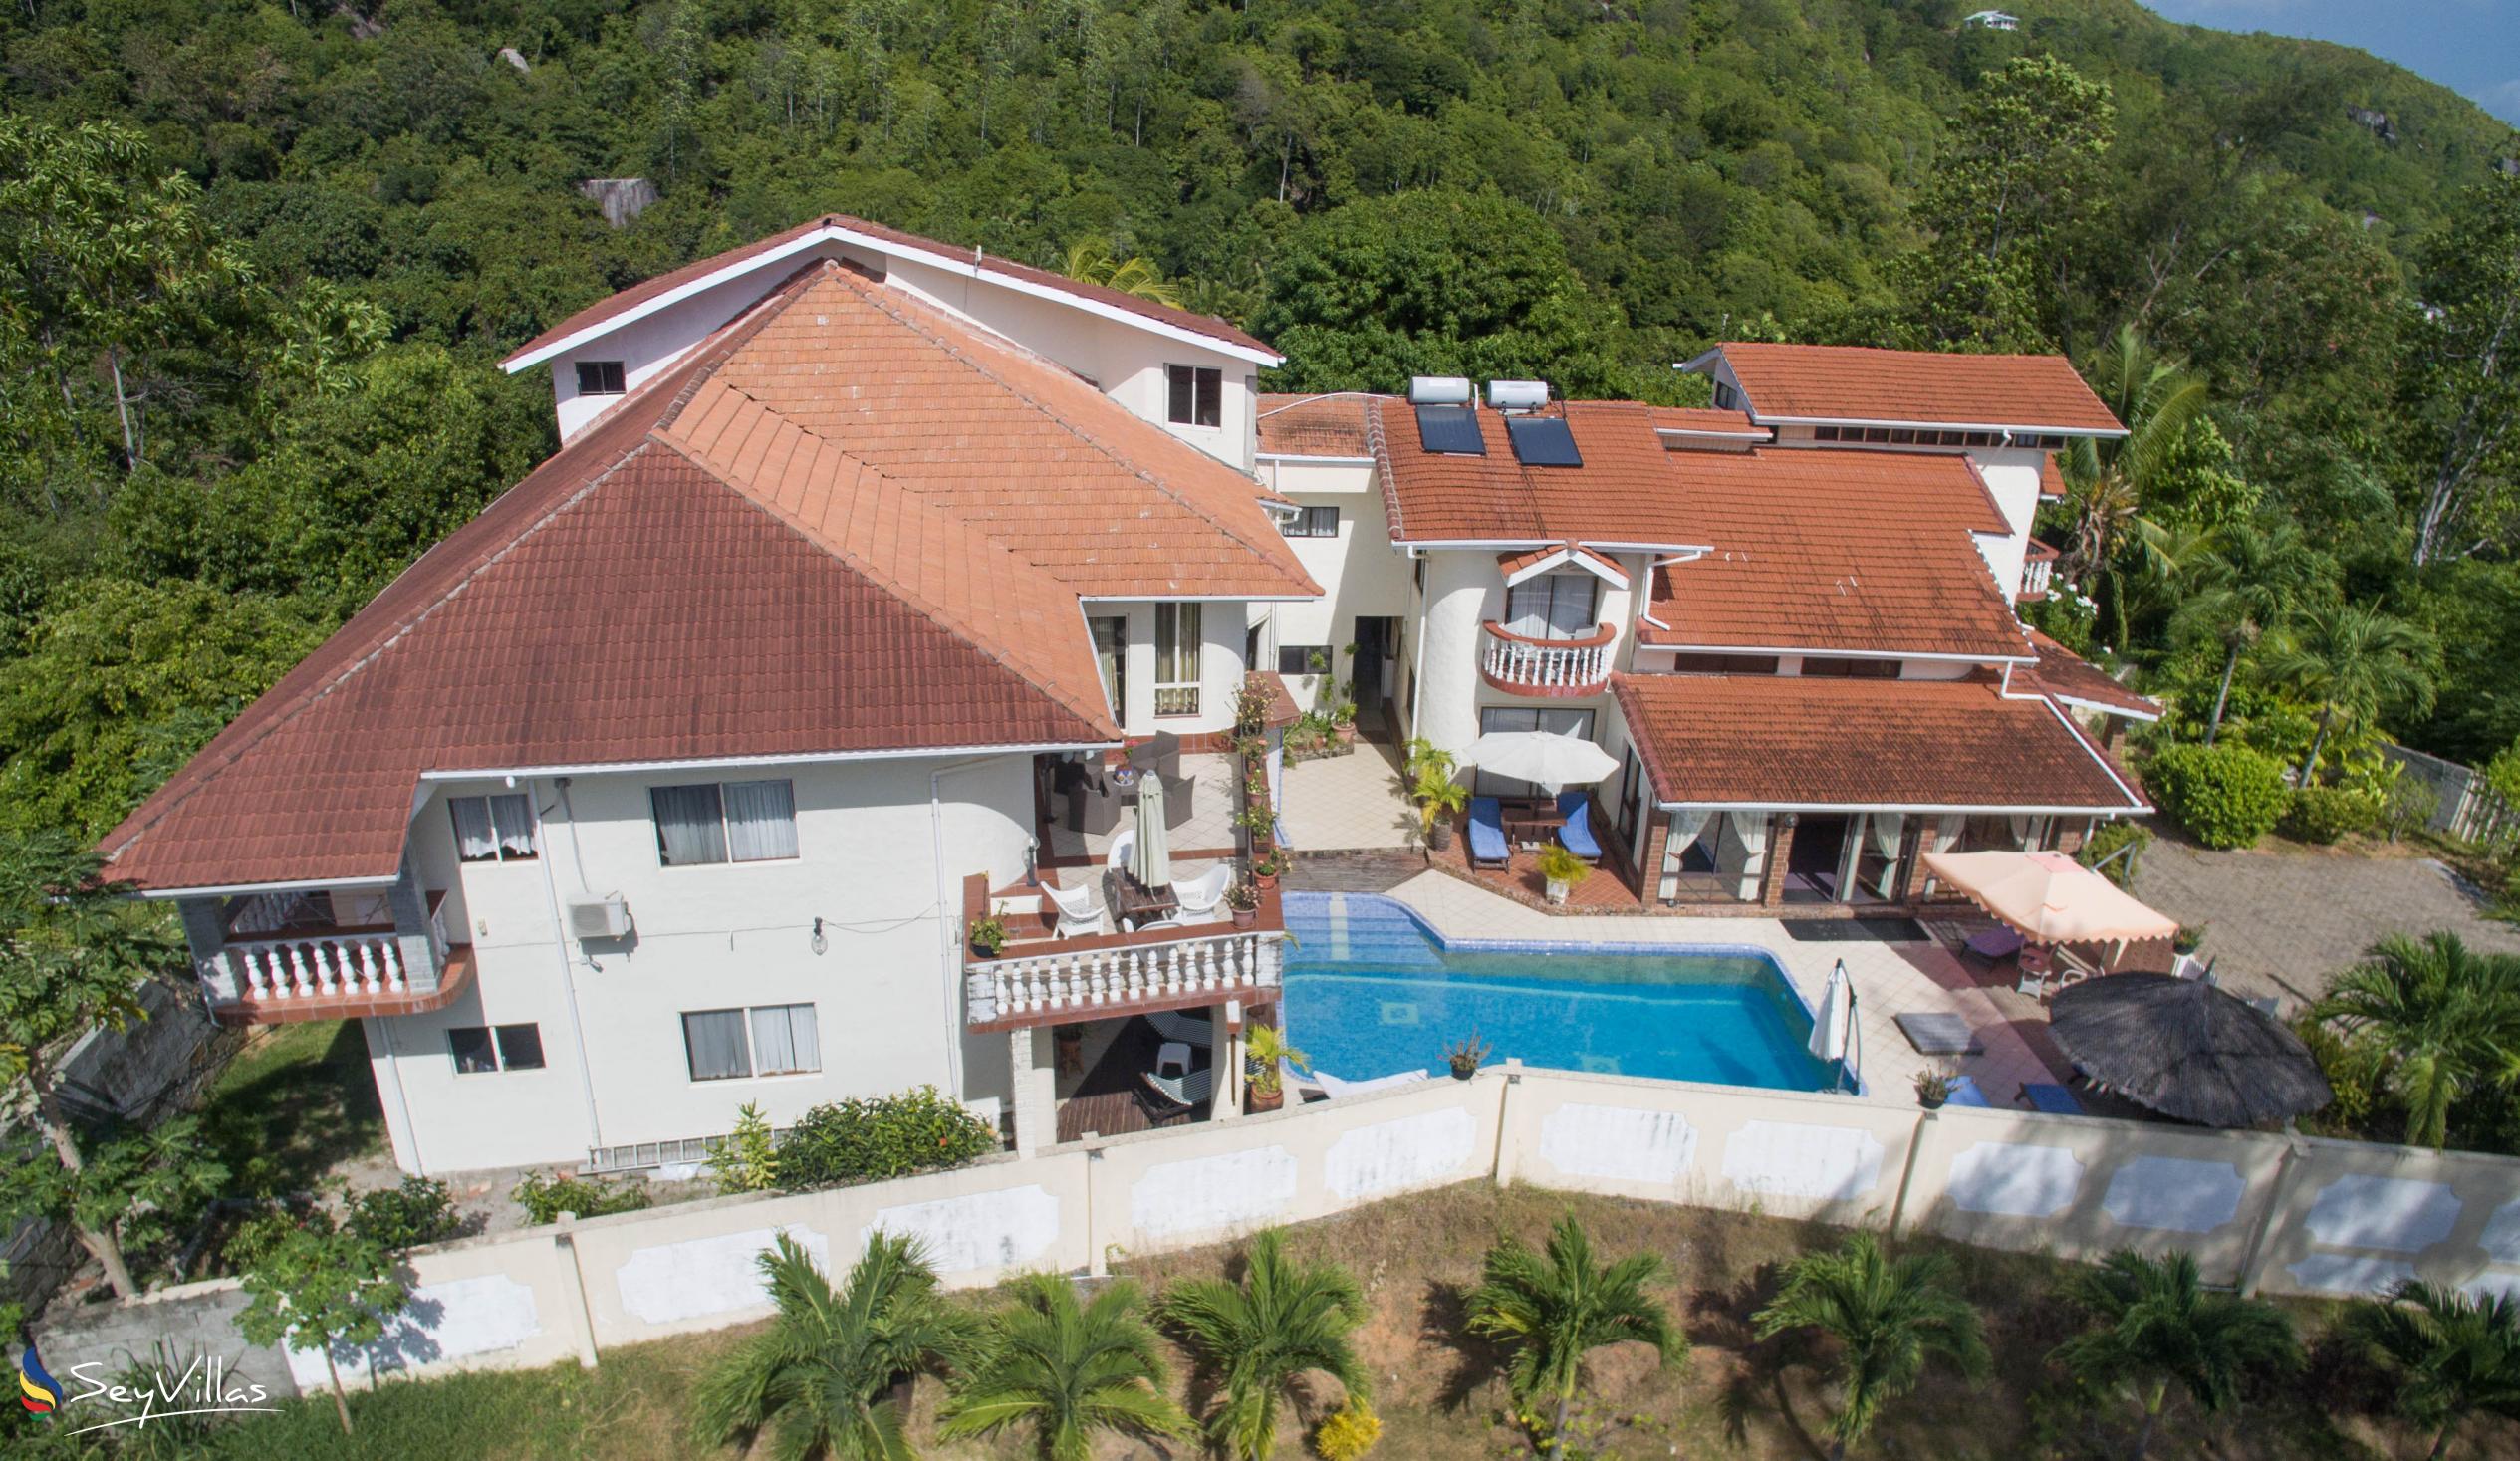 Photo 2: Carana Hilltop Villa - Outdoor area - Mahé (Seychelles)